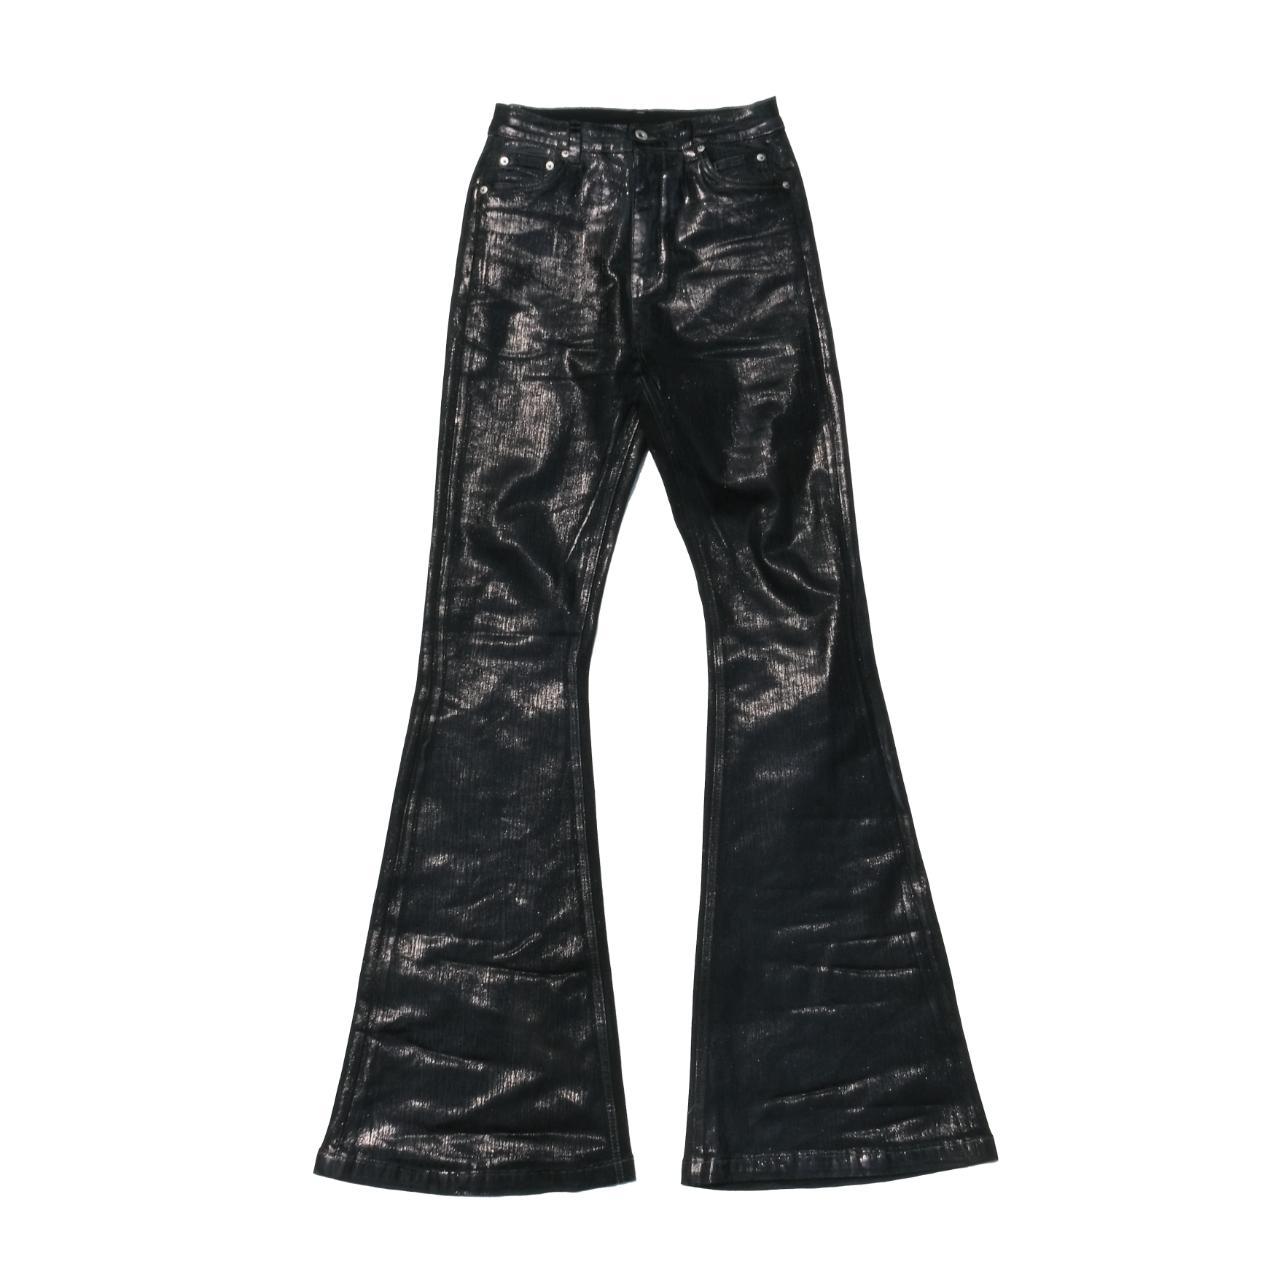 Rick Owens DRKSHDW Black Bias Bootcut Jeans